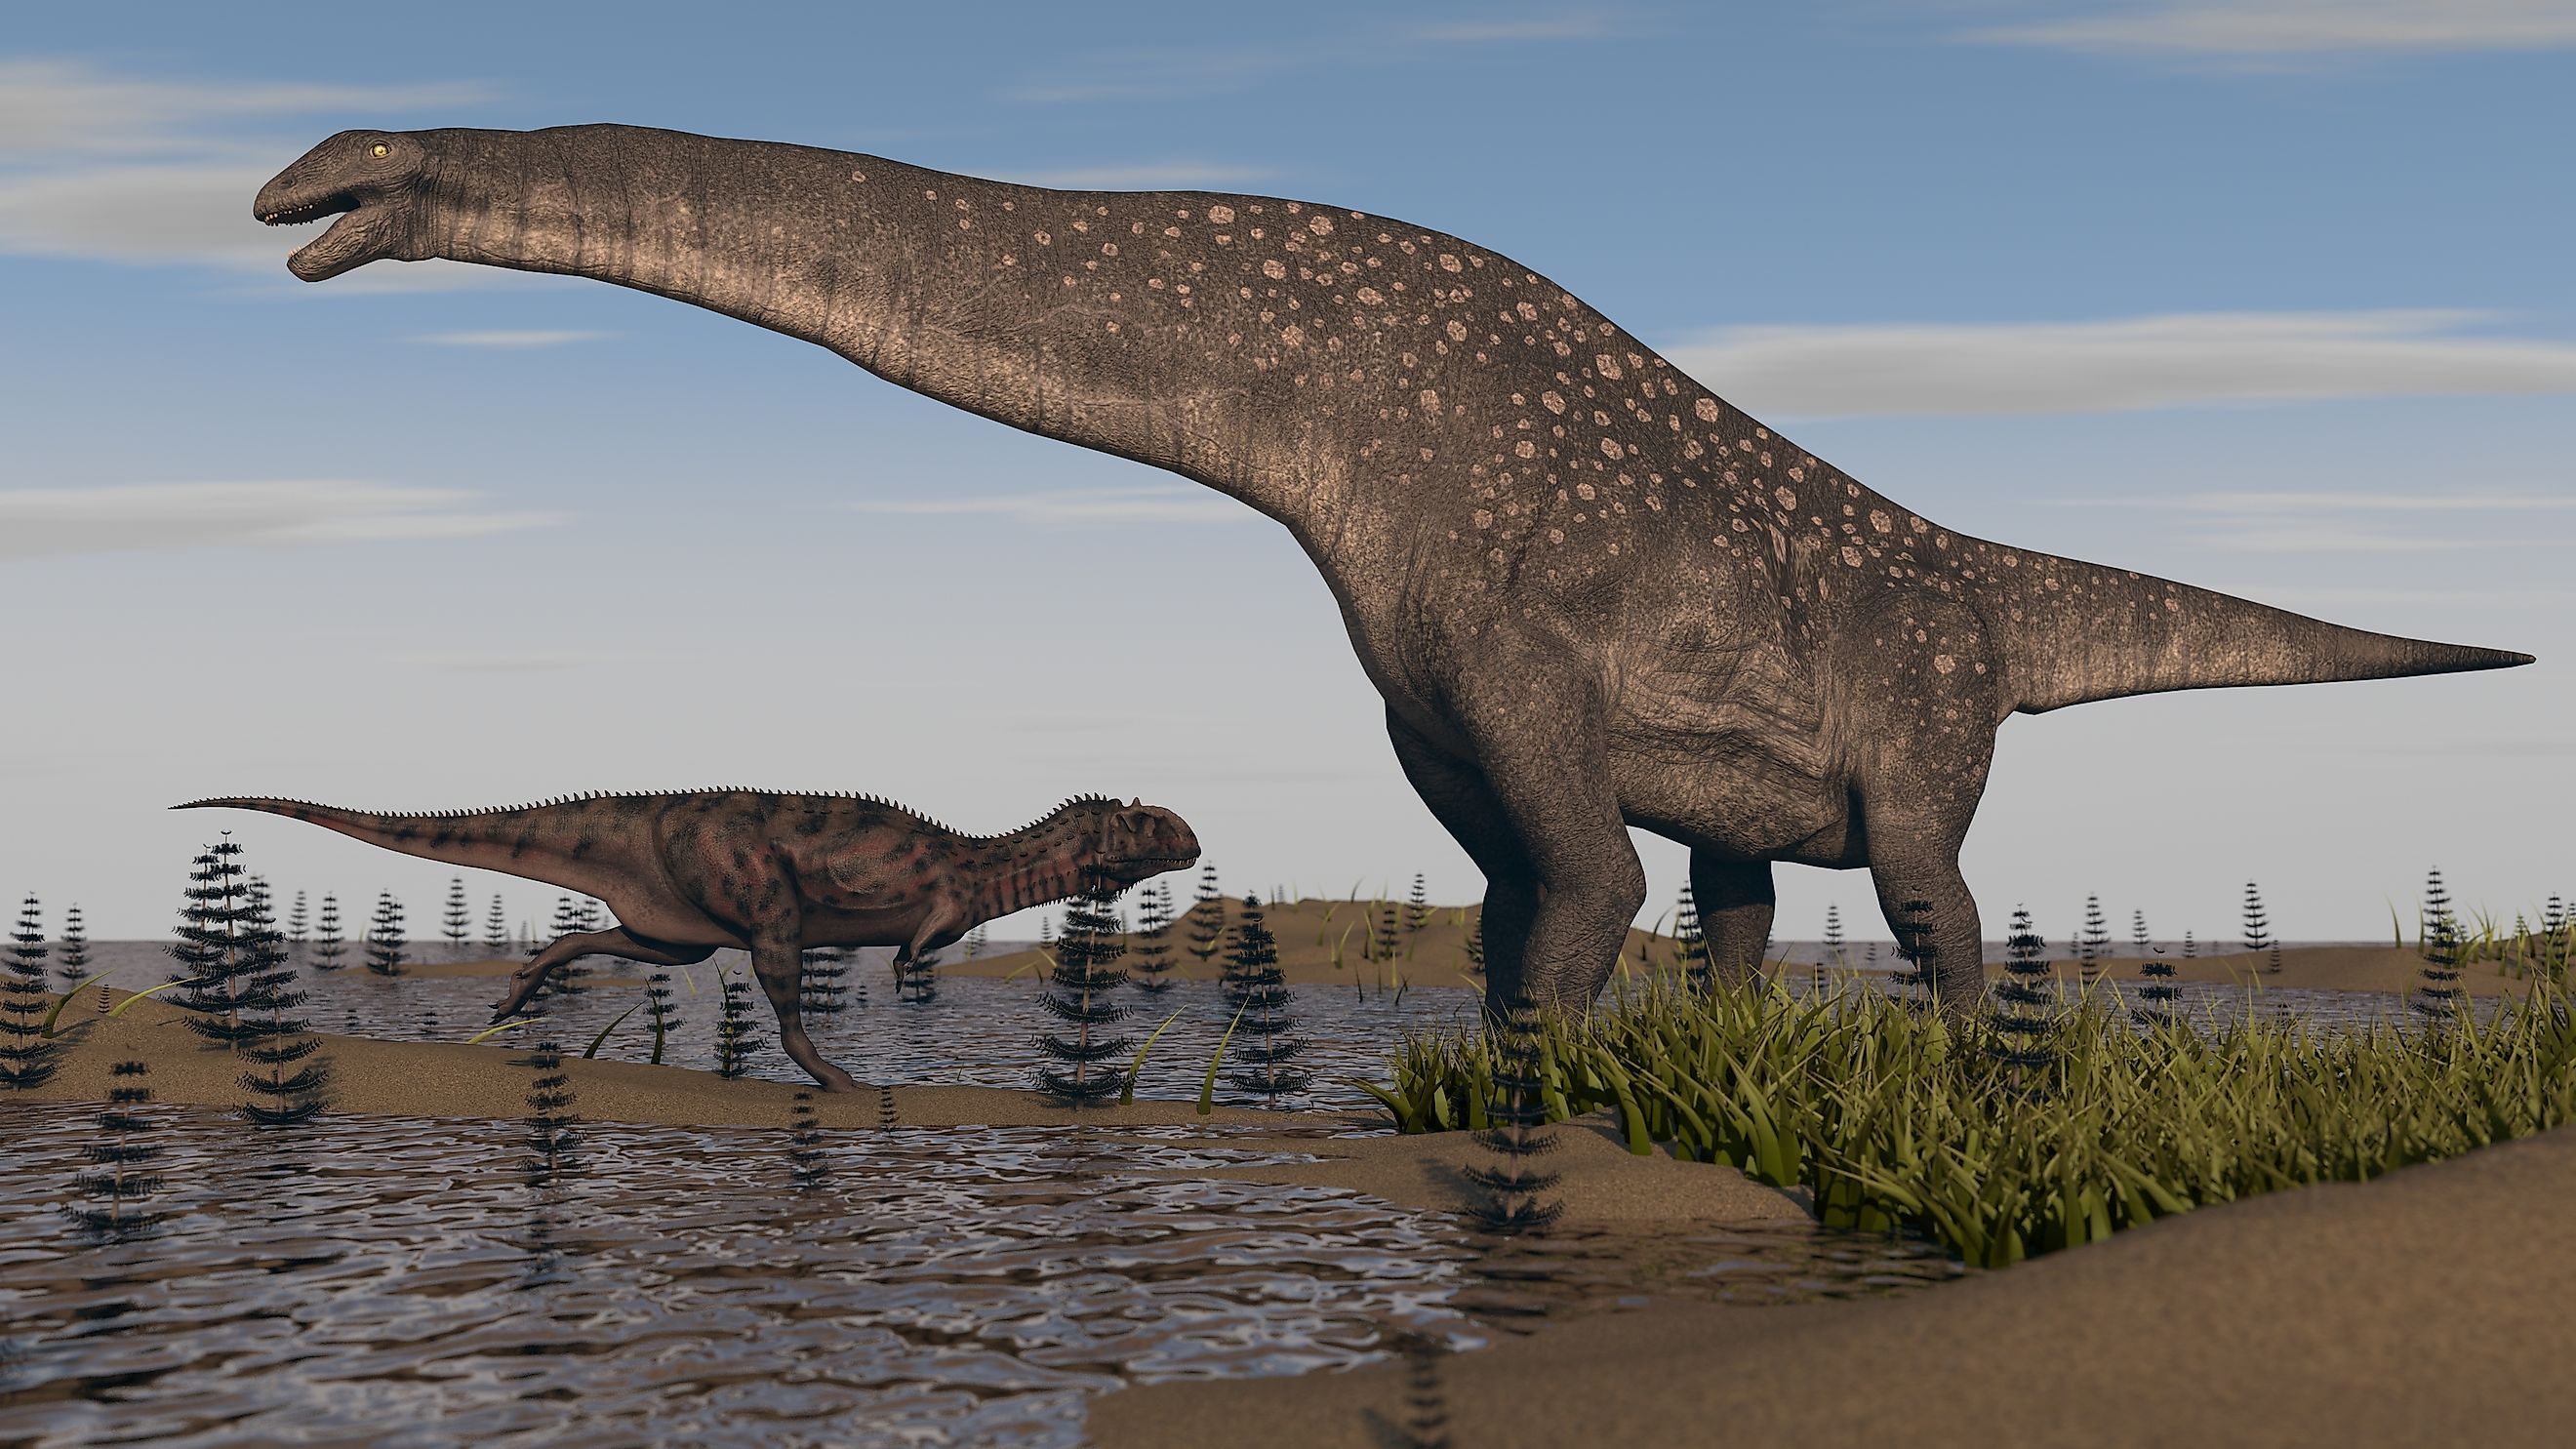 3D rendering of a titanosaur in swamp grass.